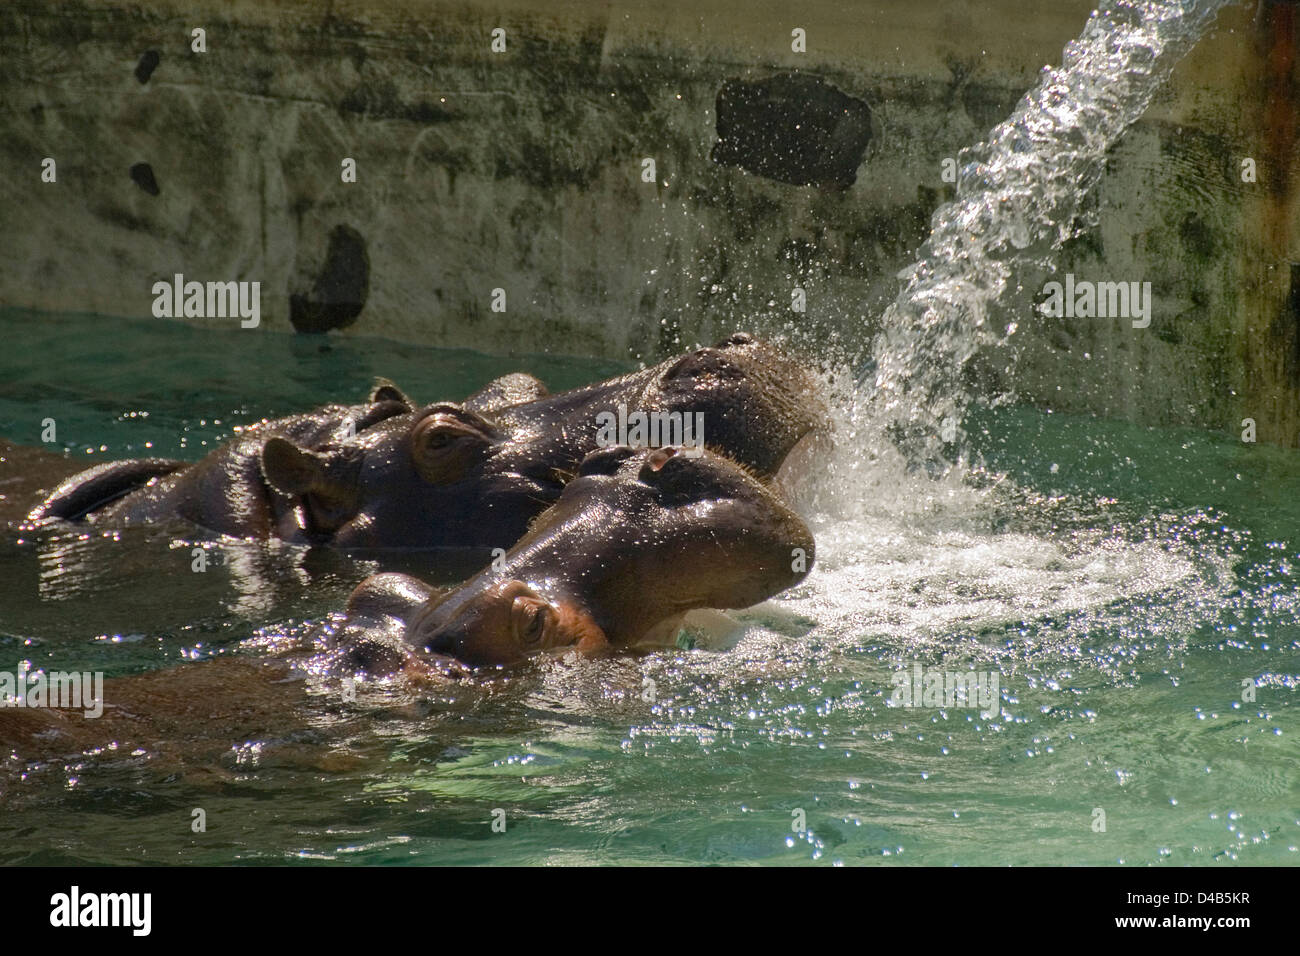 Two hippos drinking water, zoo Schönbrunn, Austria Stock Photo